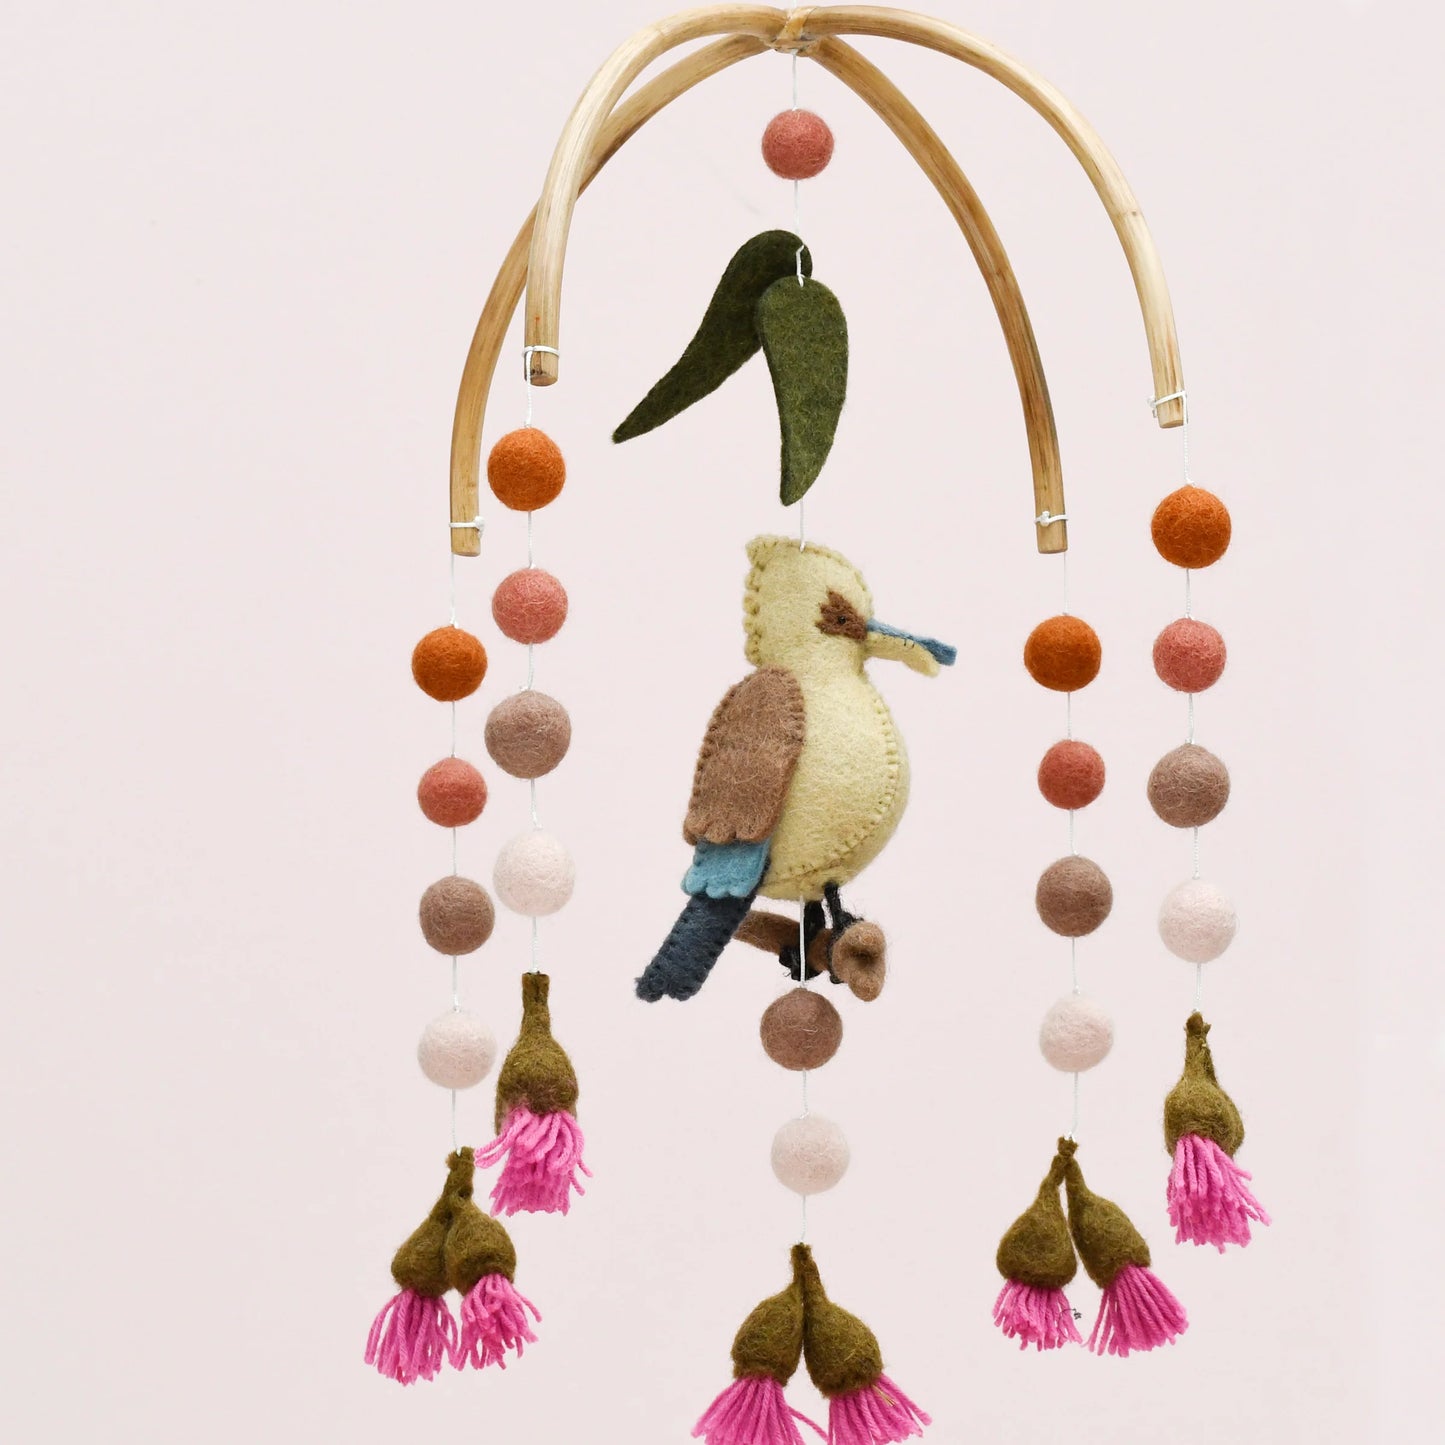 Kookaburra & Gum Blossom Mobile Hanging